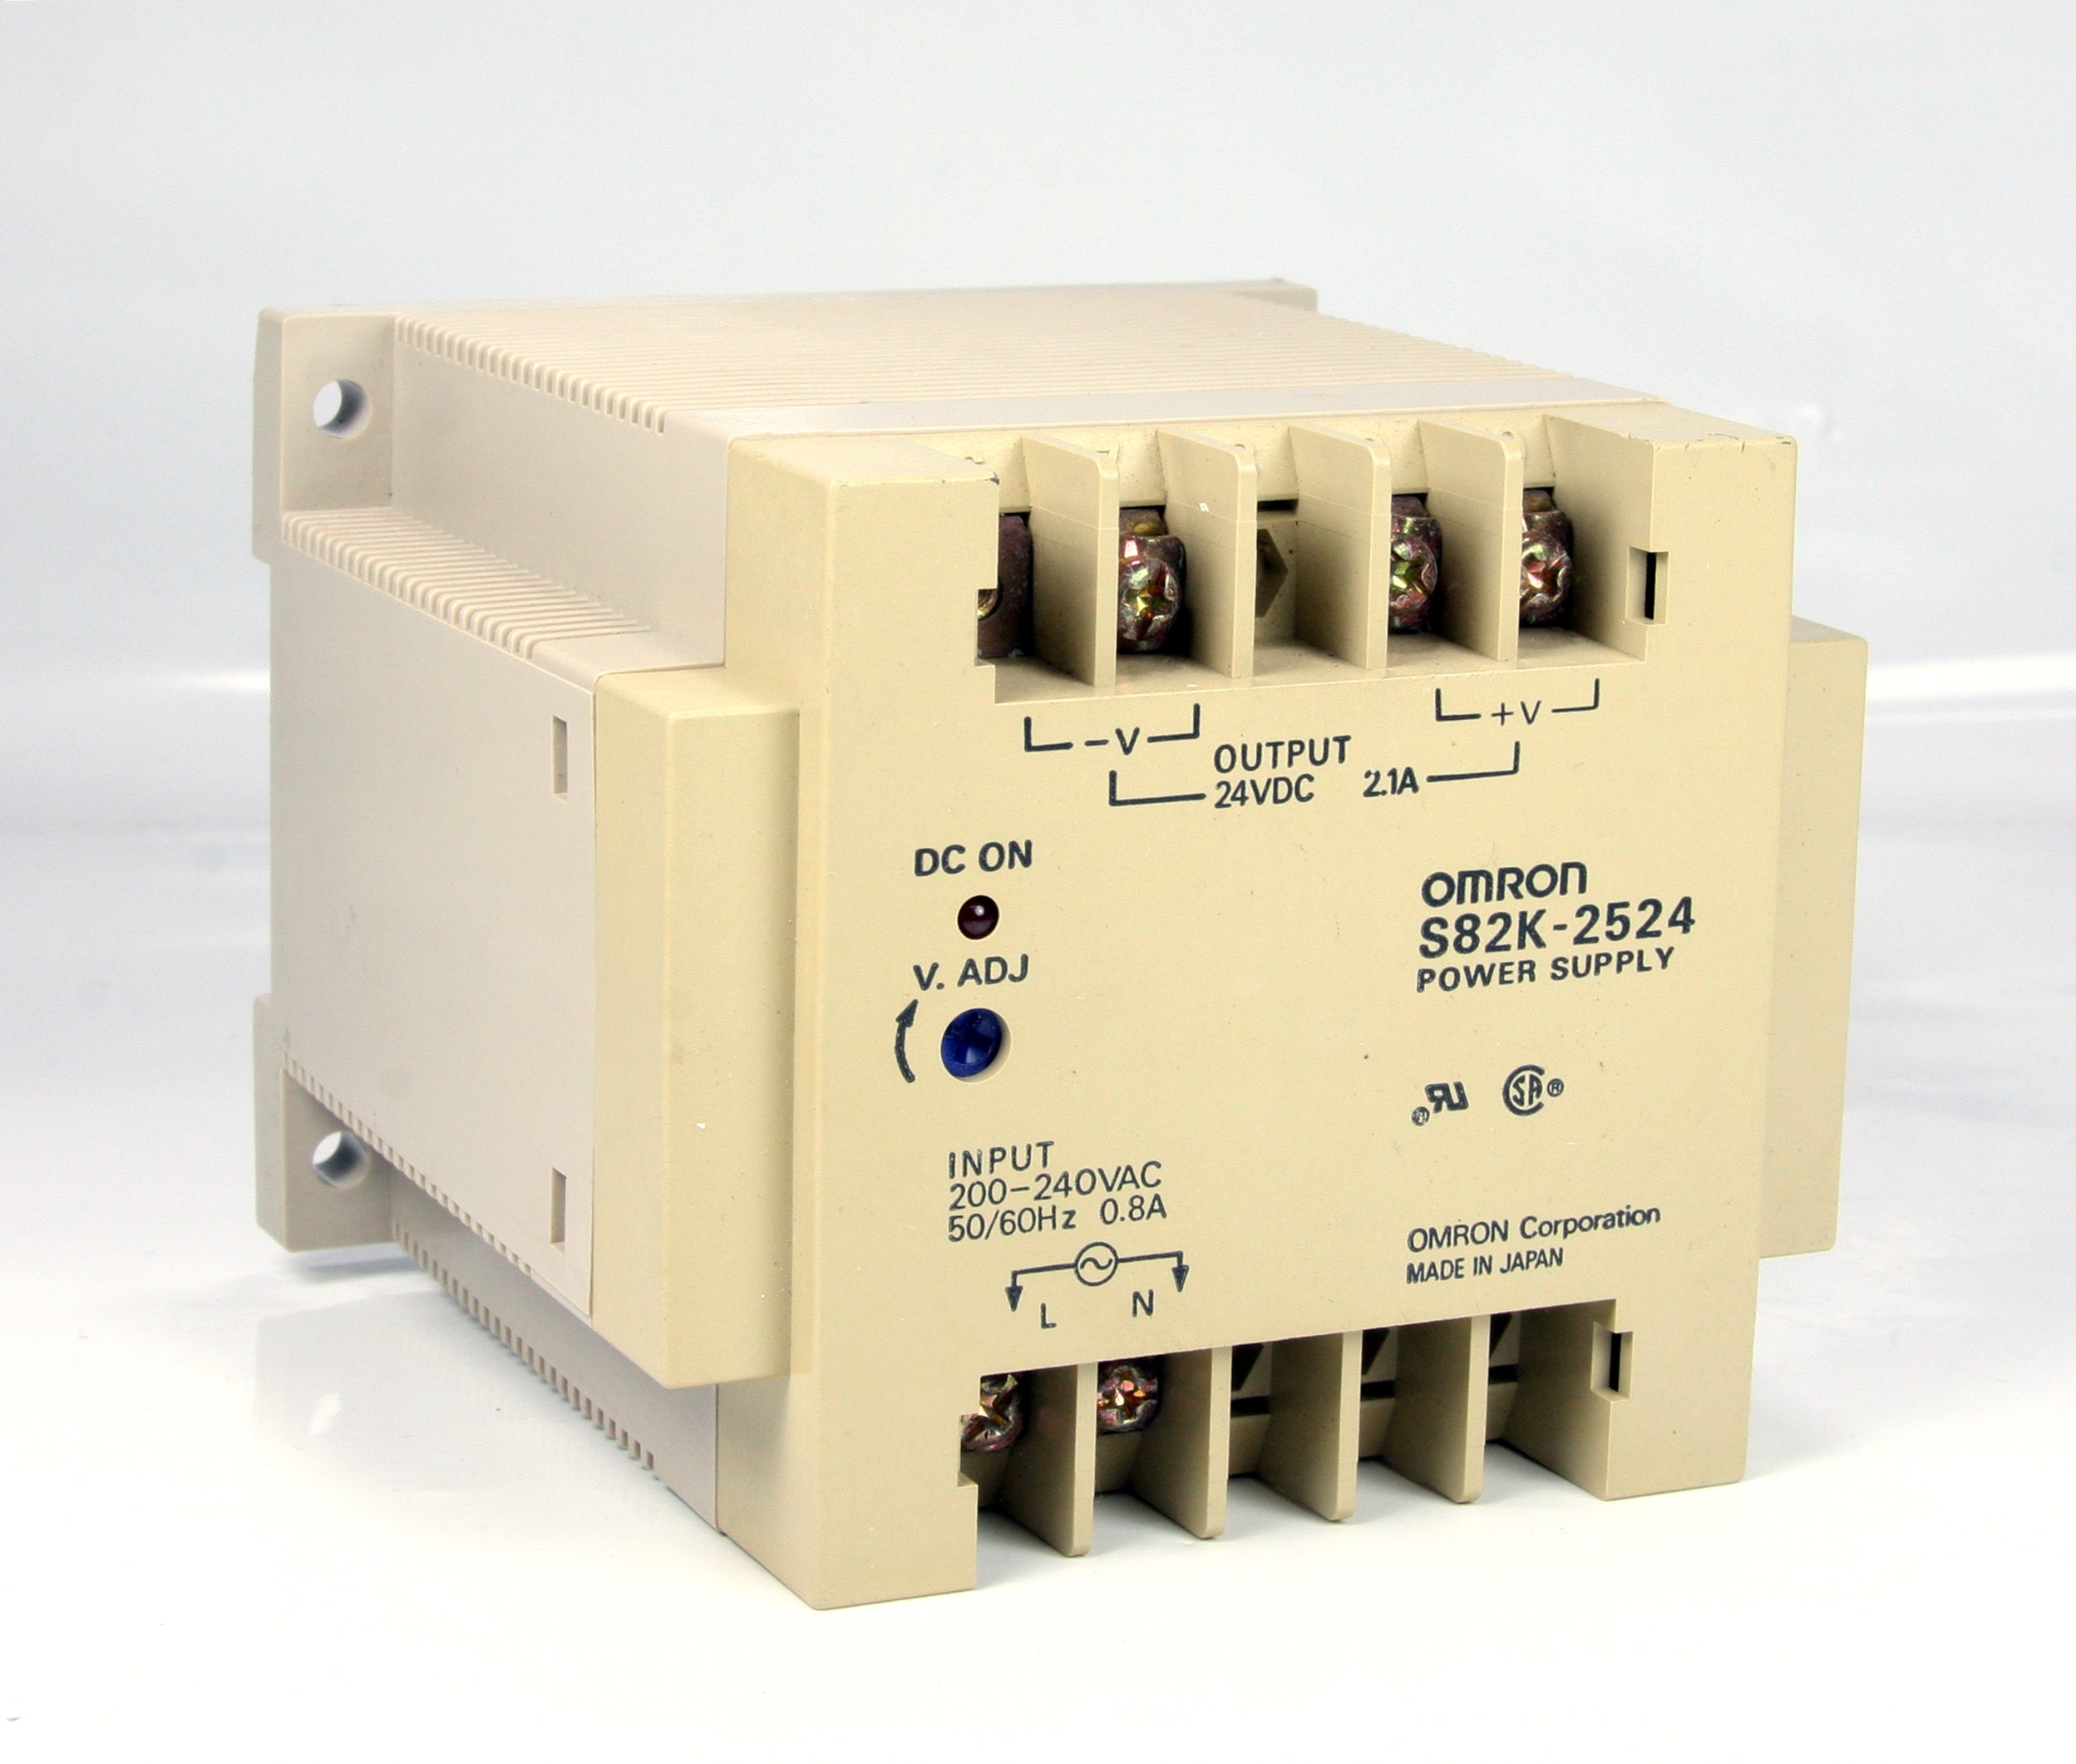 Omron Power Supply S82K-2524 Input: 200-240V AC ; Output: 24VDC